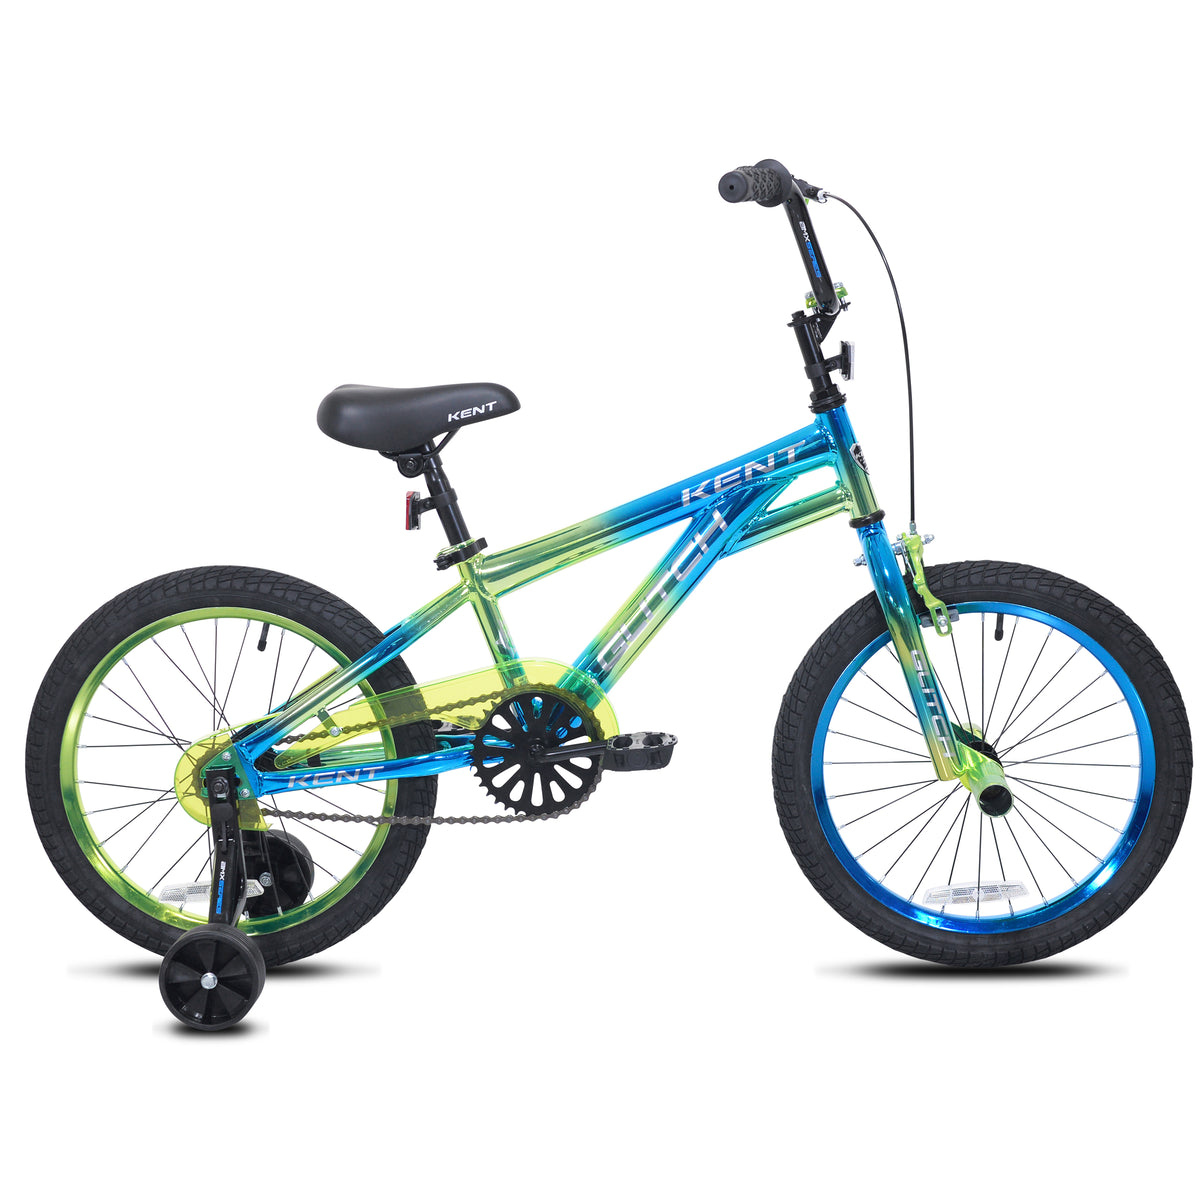 18" Kent Glitch | Bike for Kids Ages 5-8